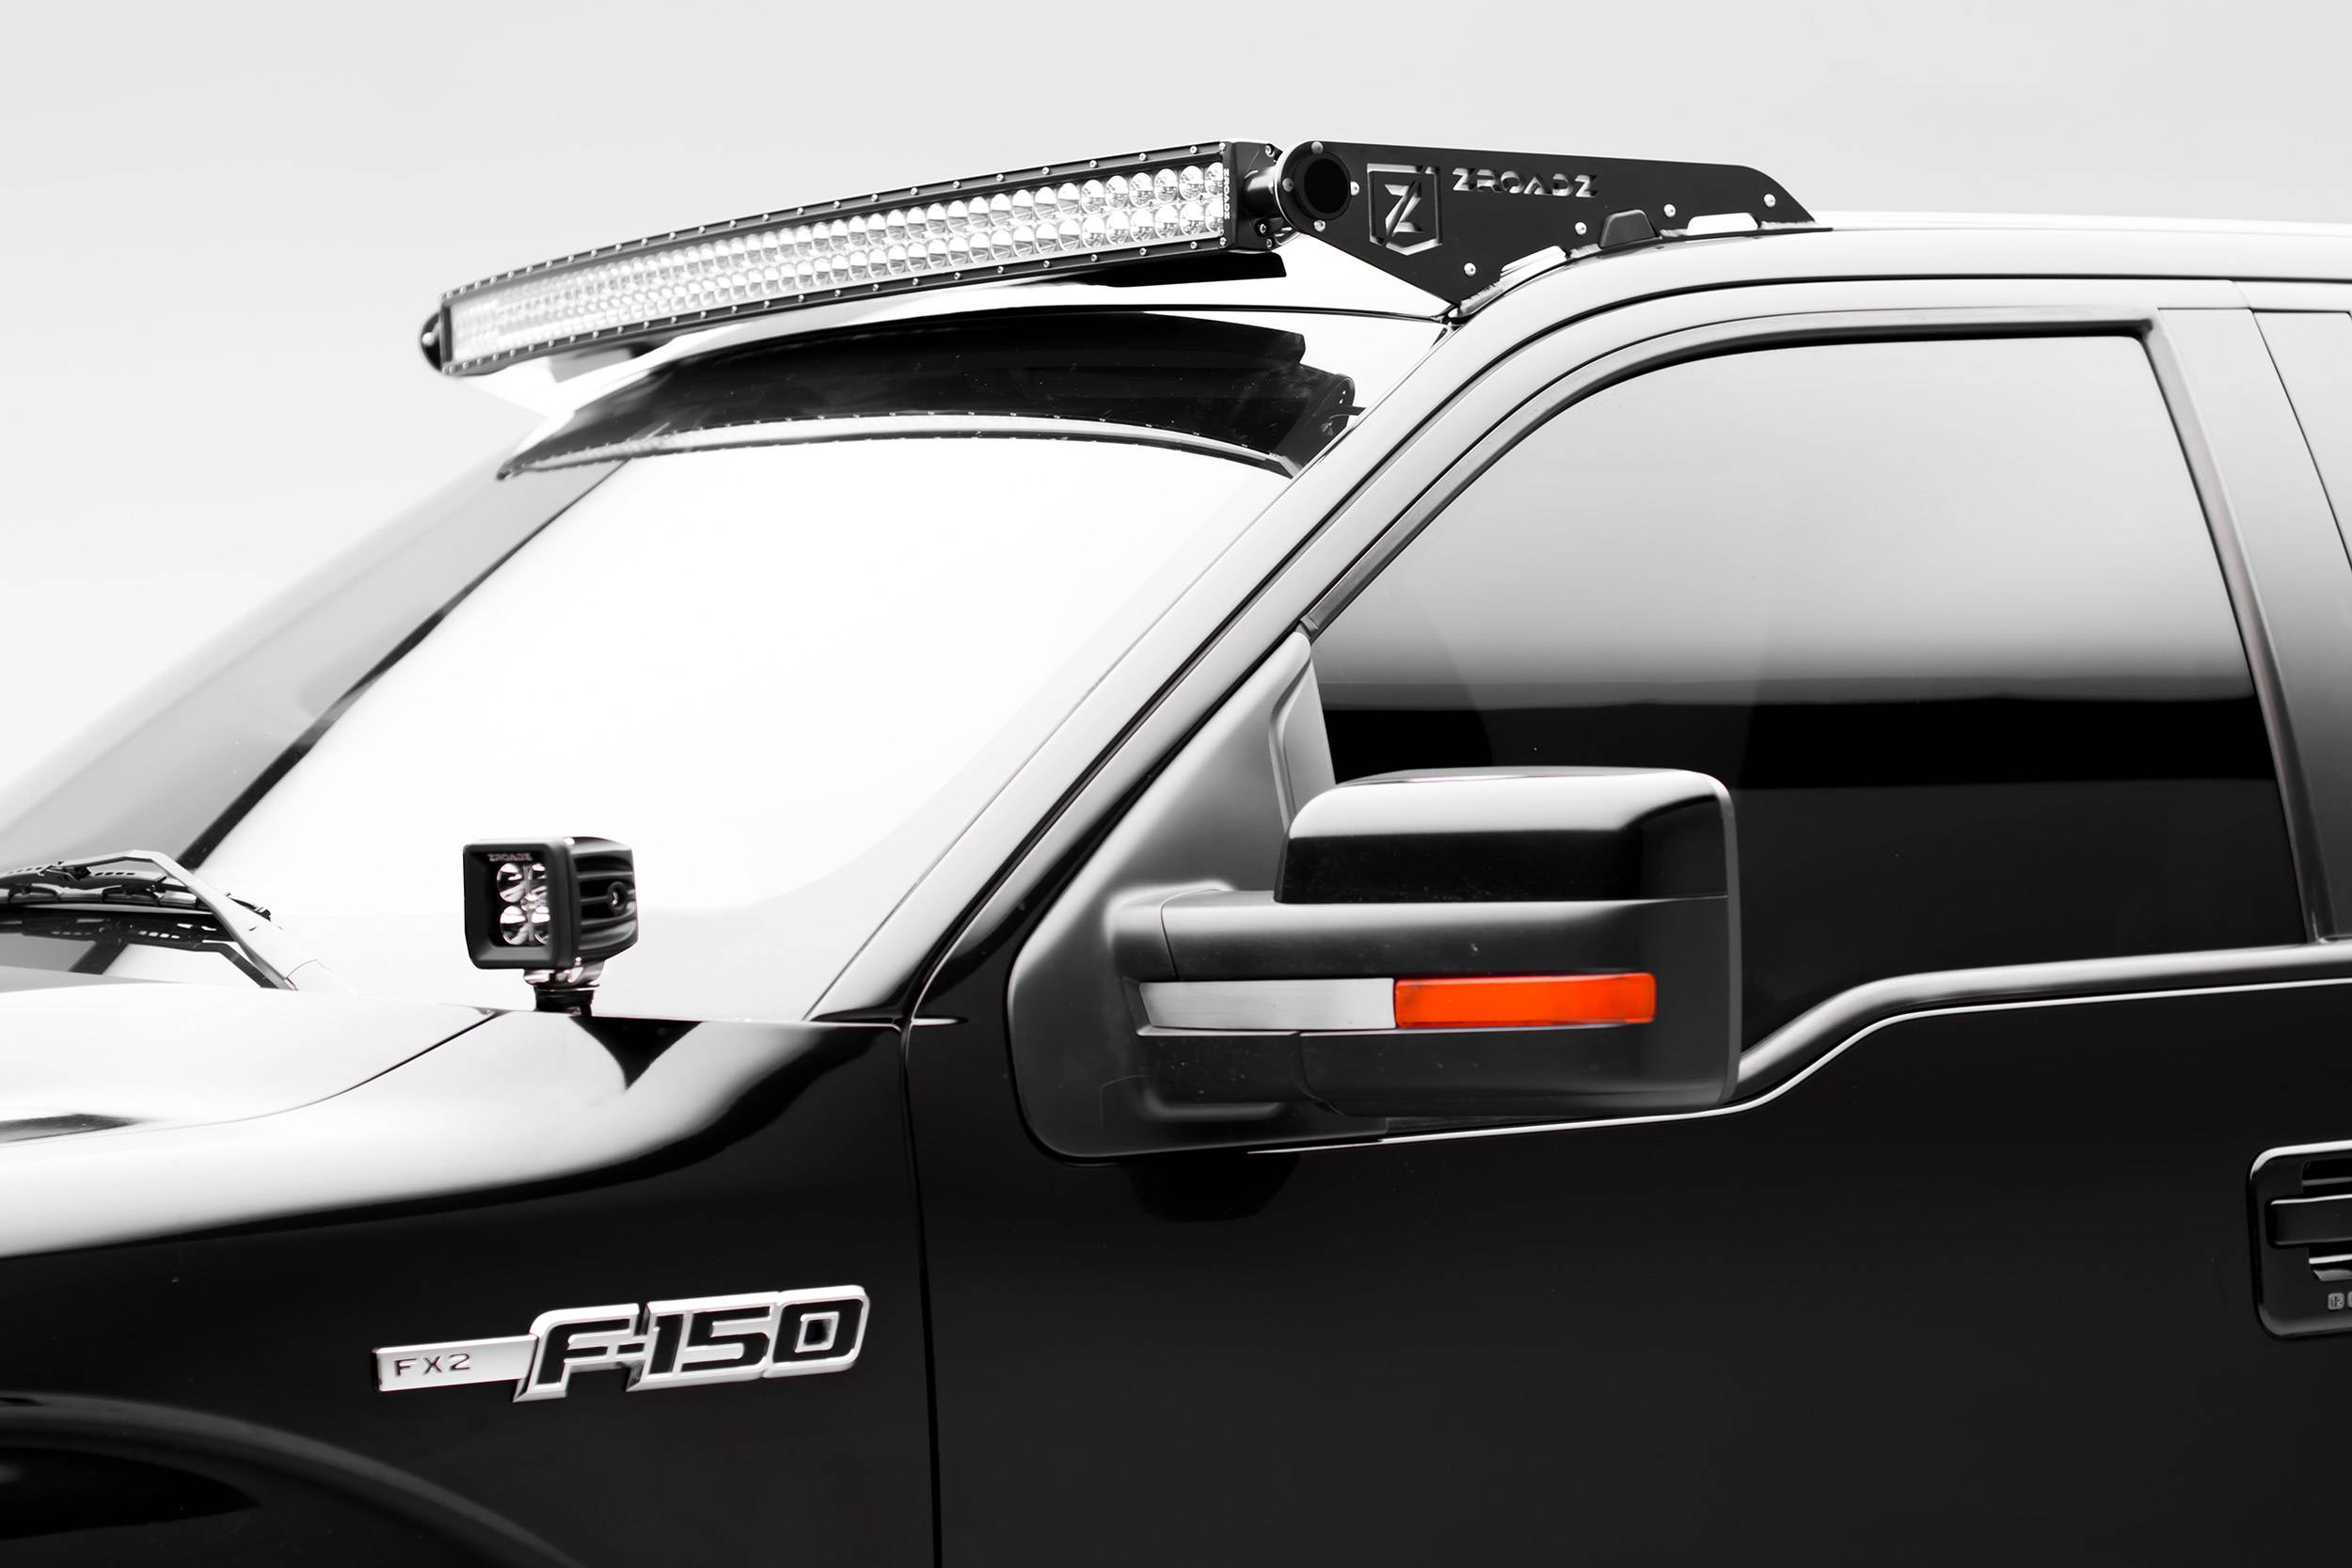 2x Mount Bracket For 2009-2014 Ford F150 Fit 50" Roof Curved LED Light Bar 